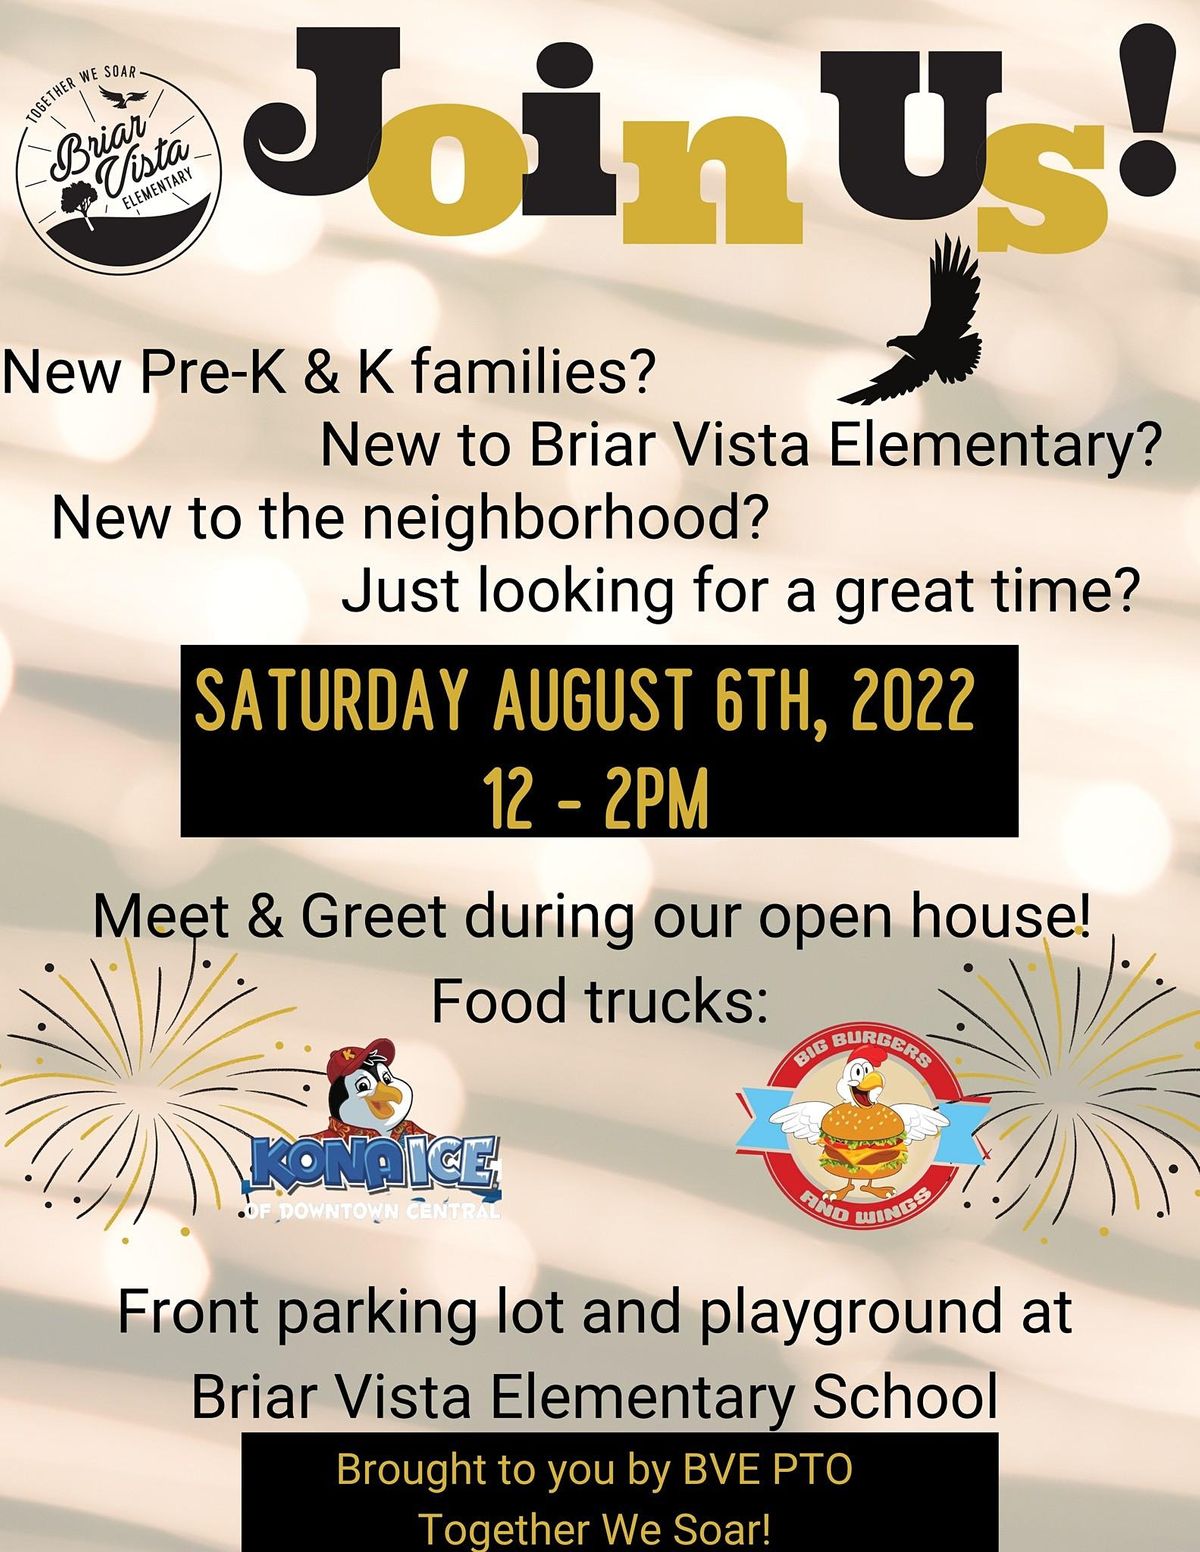 Food Trucks with Friends - Meet & Greet at Briar Vista Elementary